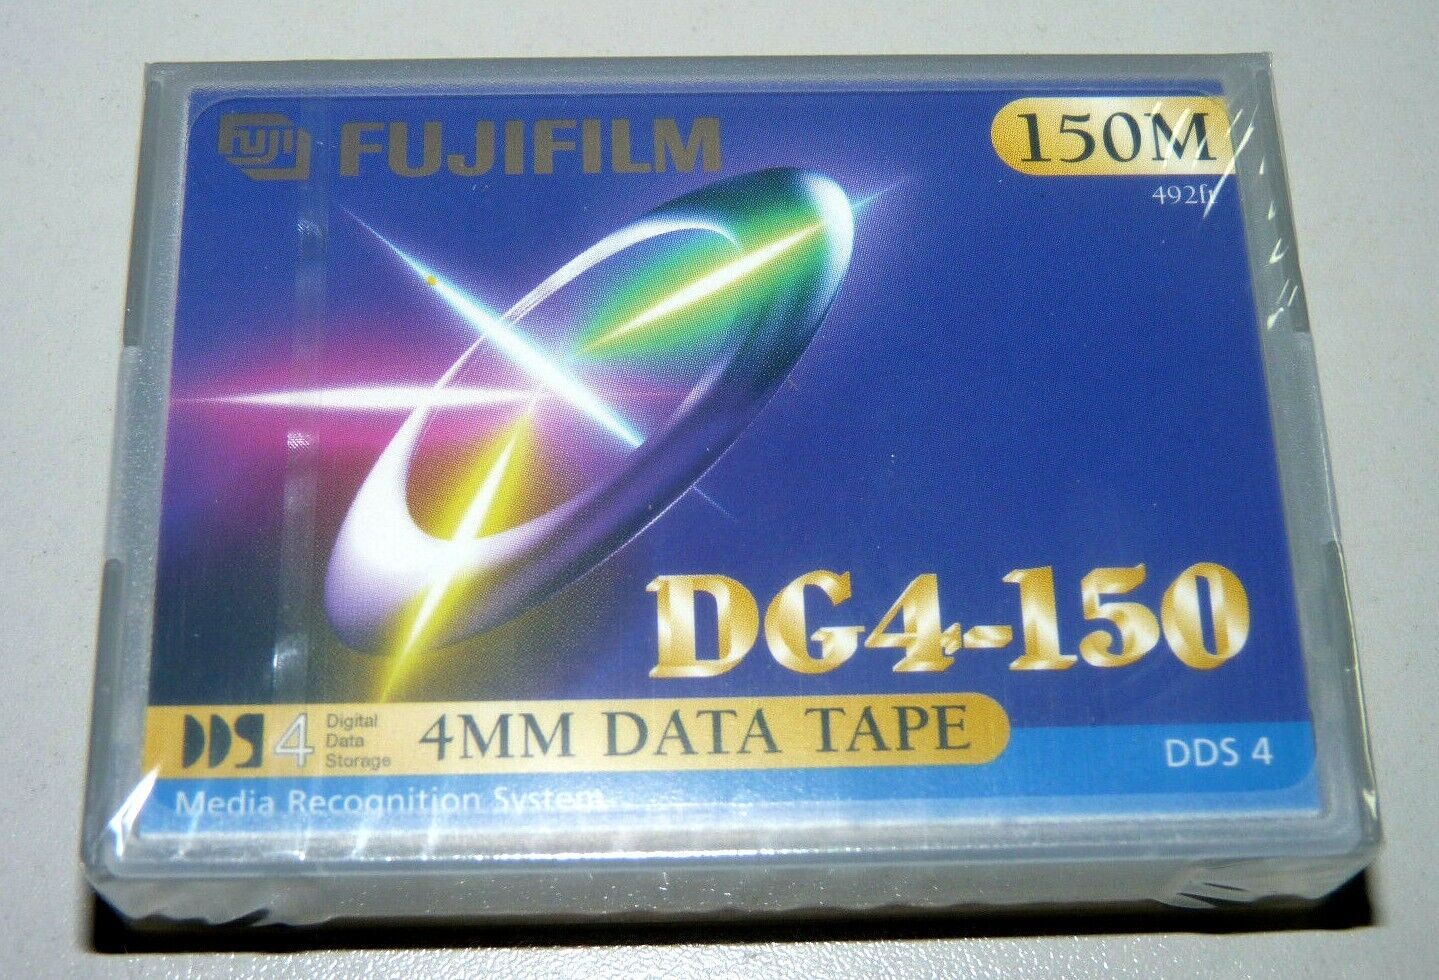 FUJIFILM DG4-150 4MM DATA TAPE 150m DDS 4 Cartridge